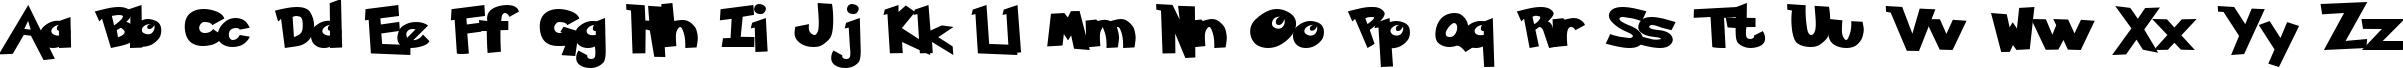 Пример написания английского алфавита шрифтом Pokemon  Normal